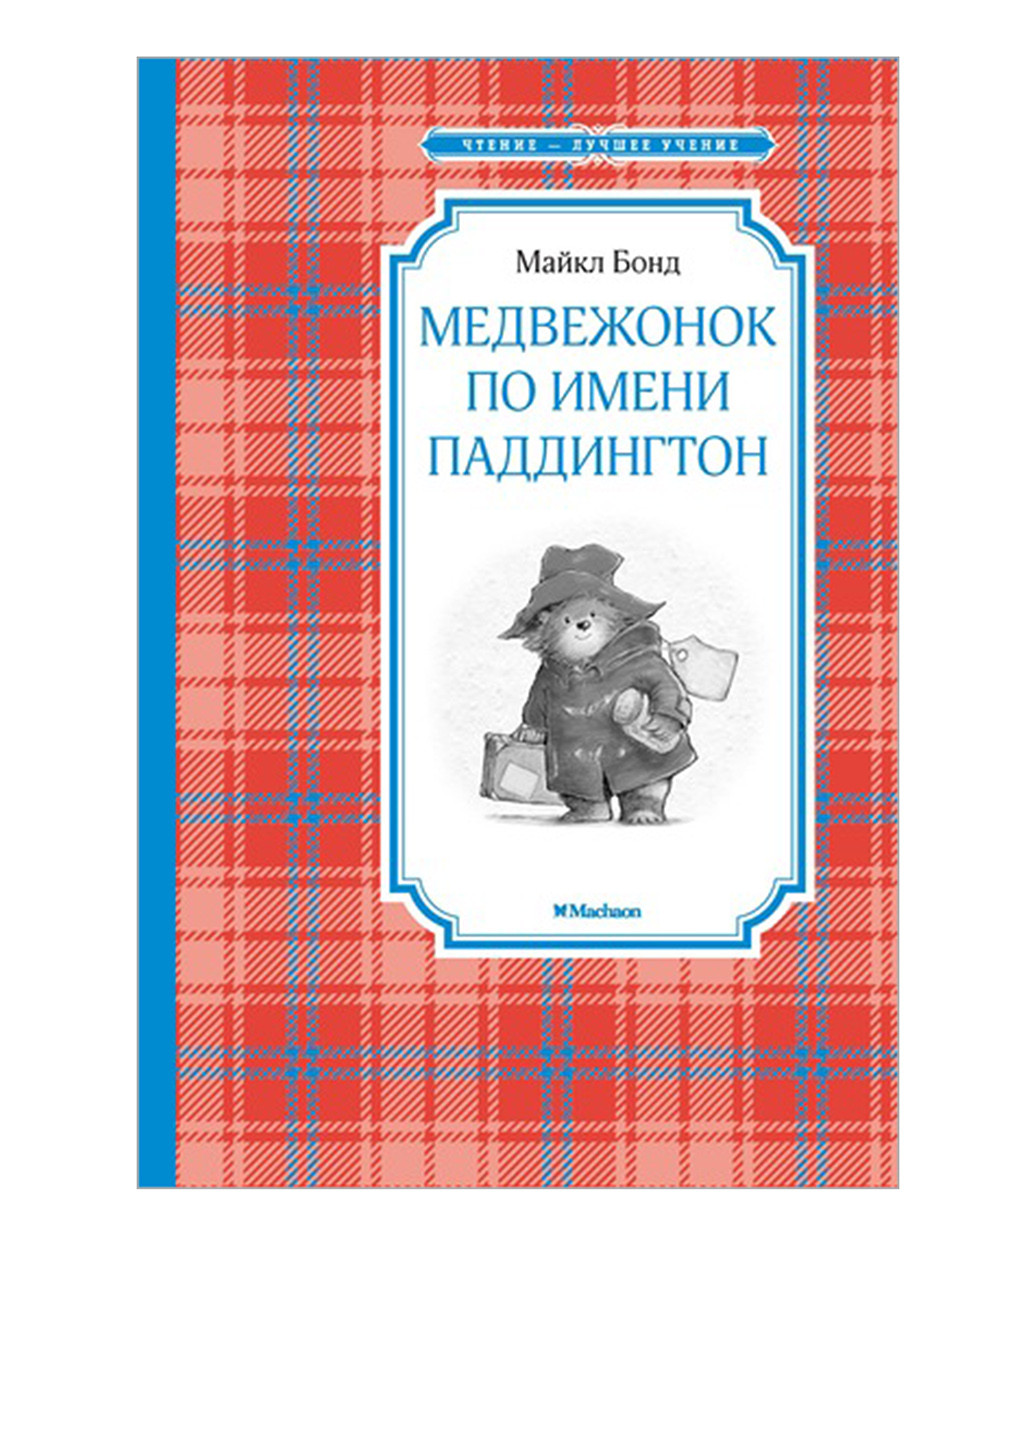 Книга "Ведмедик на ім'я Паддінгтон" Издательство "Махаон" (16955236)